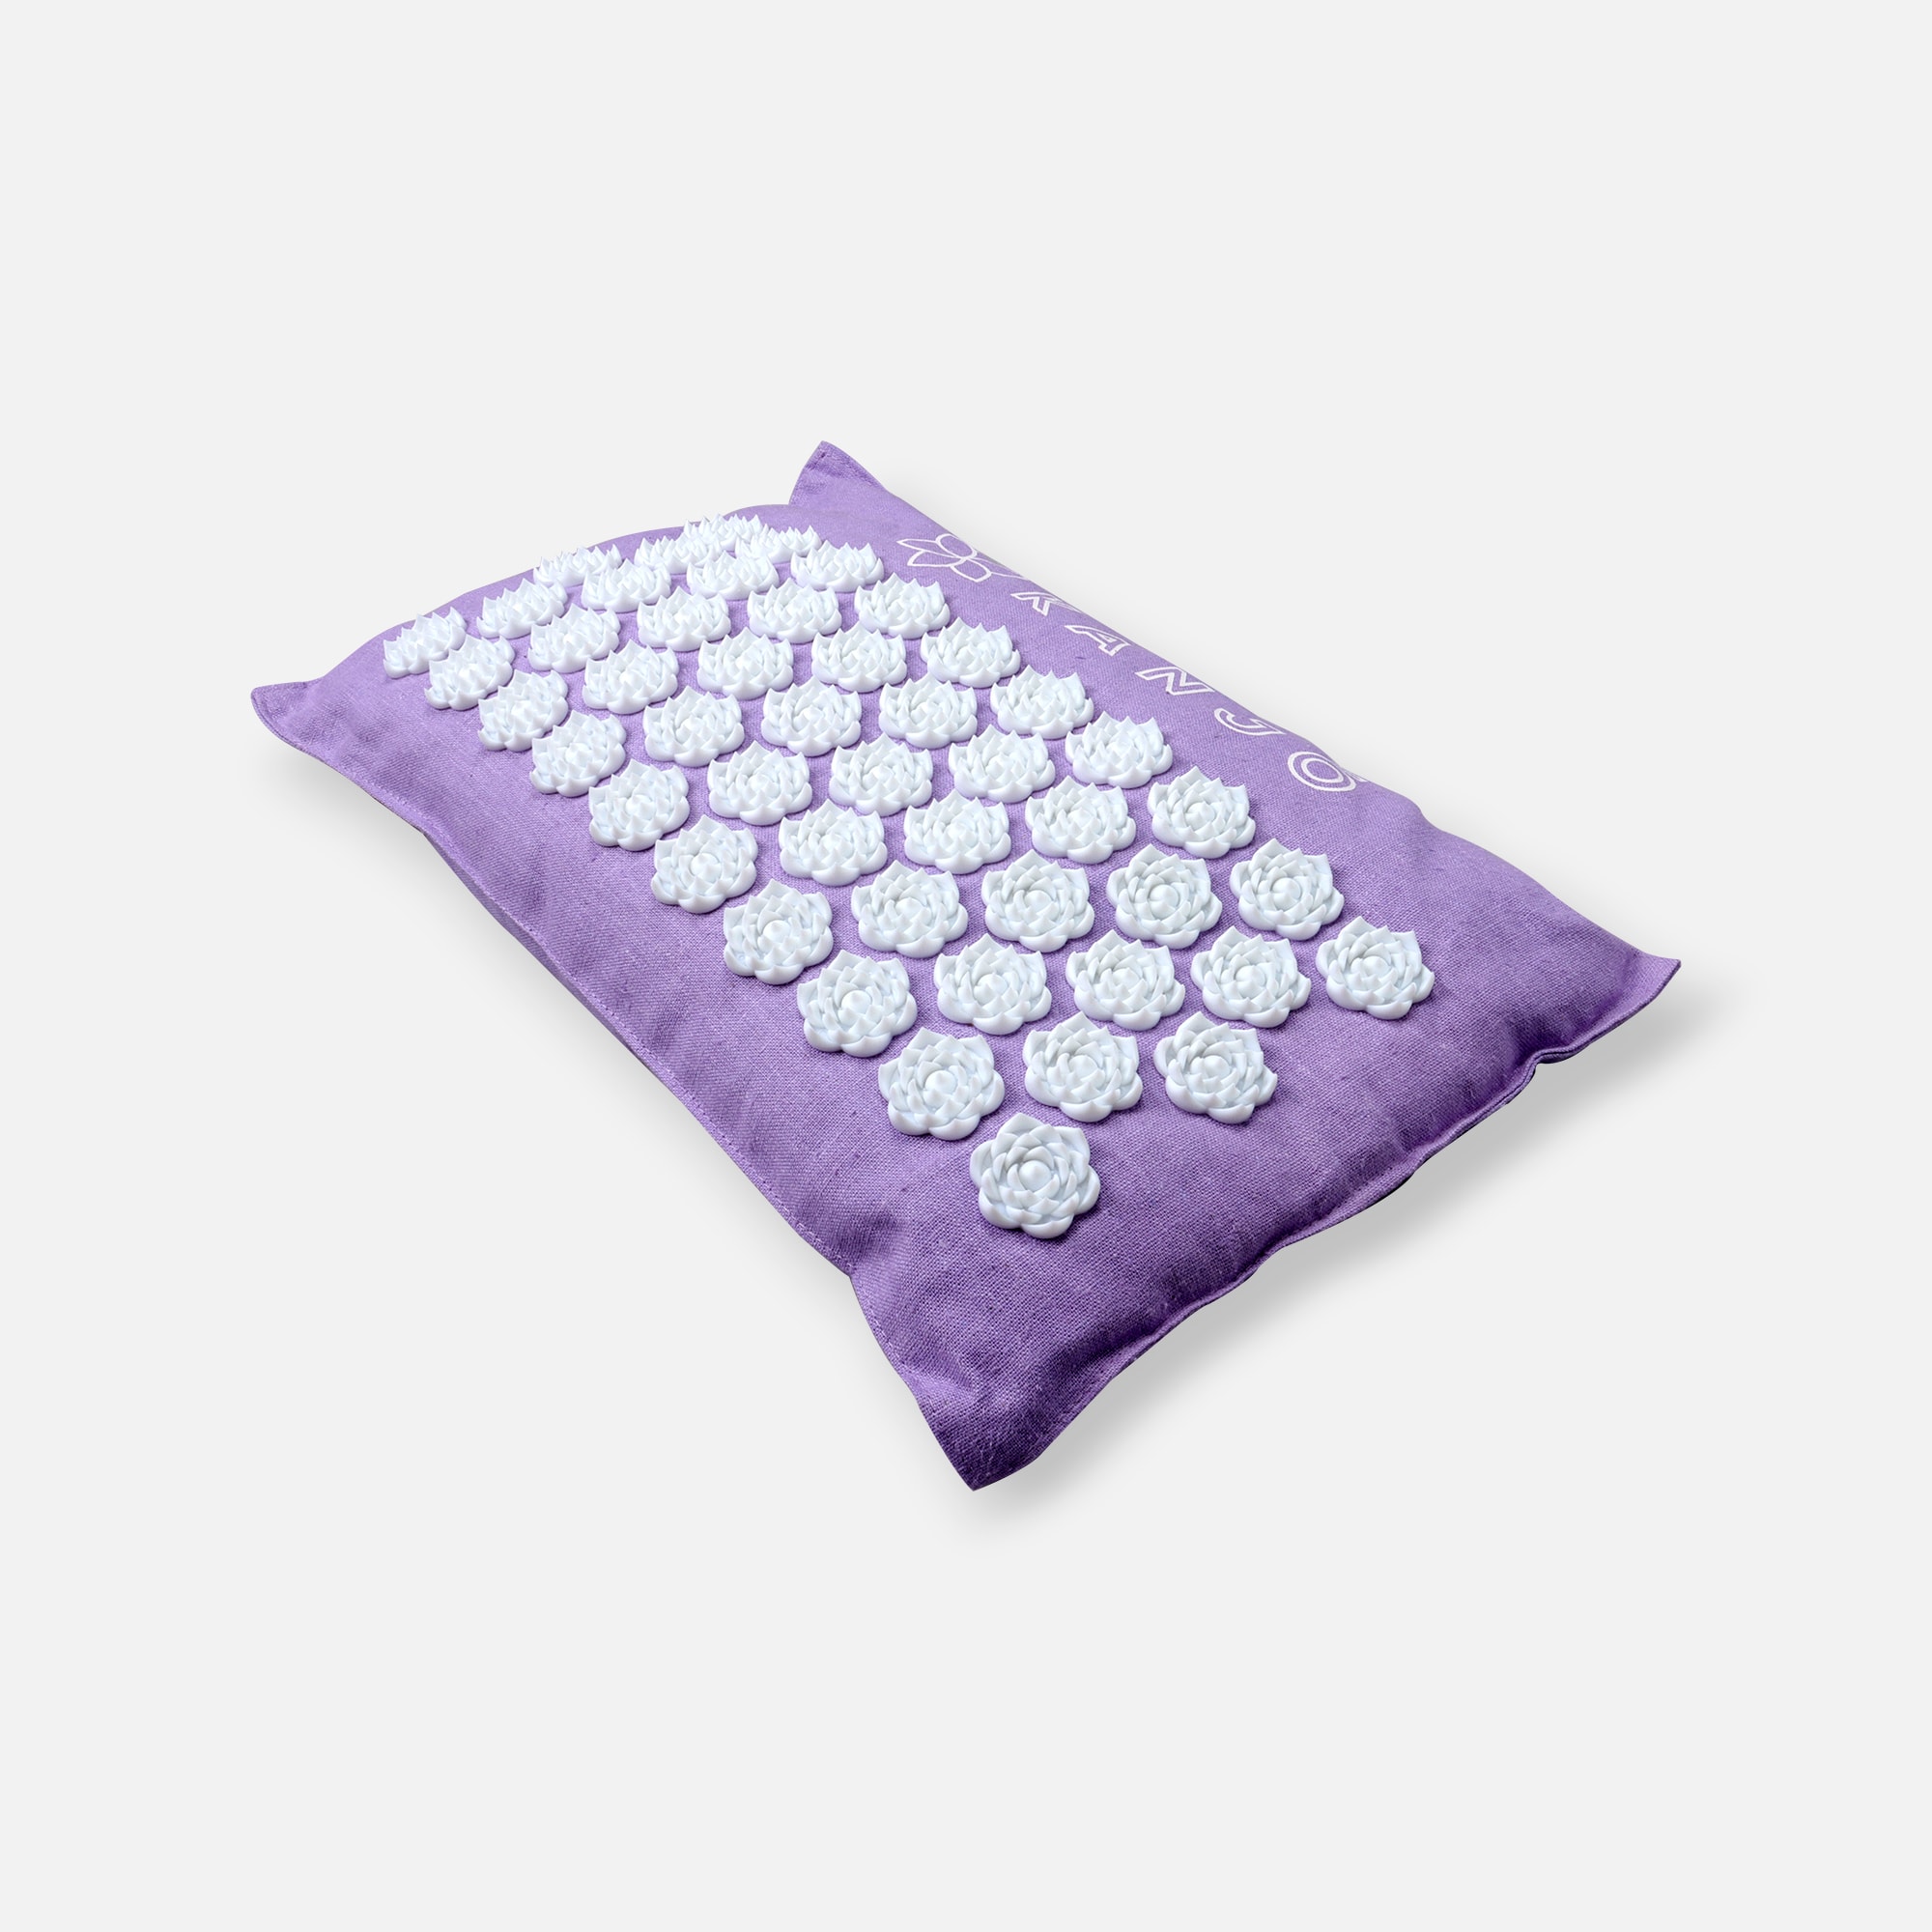 Kanjo Aroma Lavender Acupressure Pillow